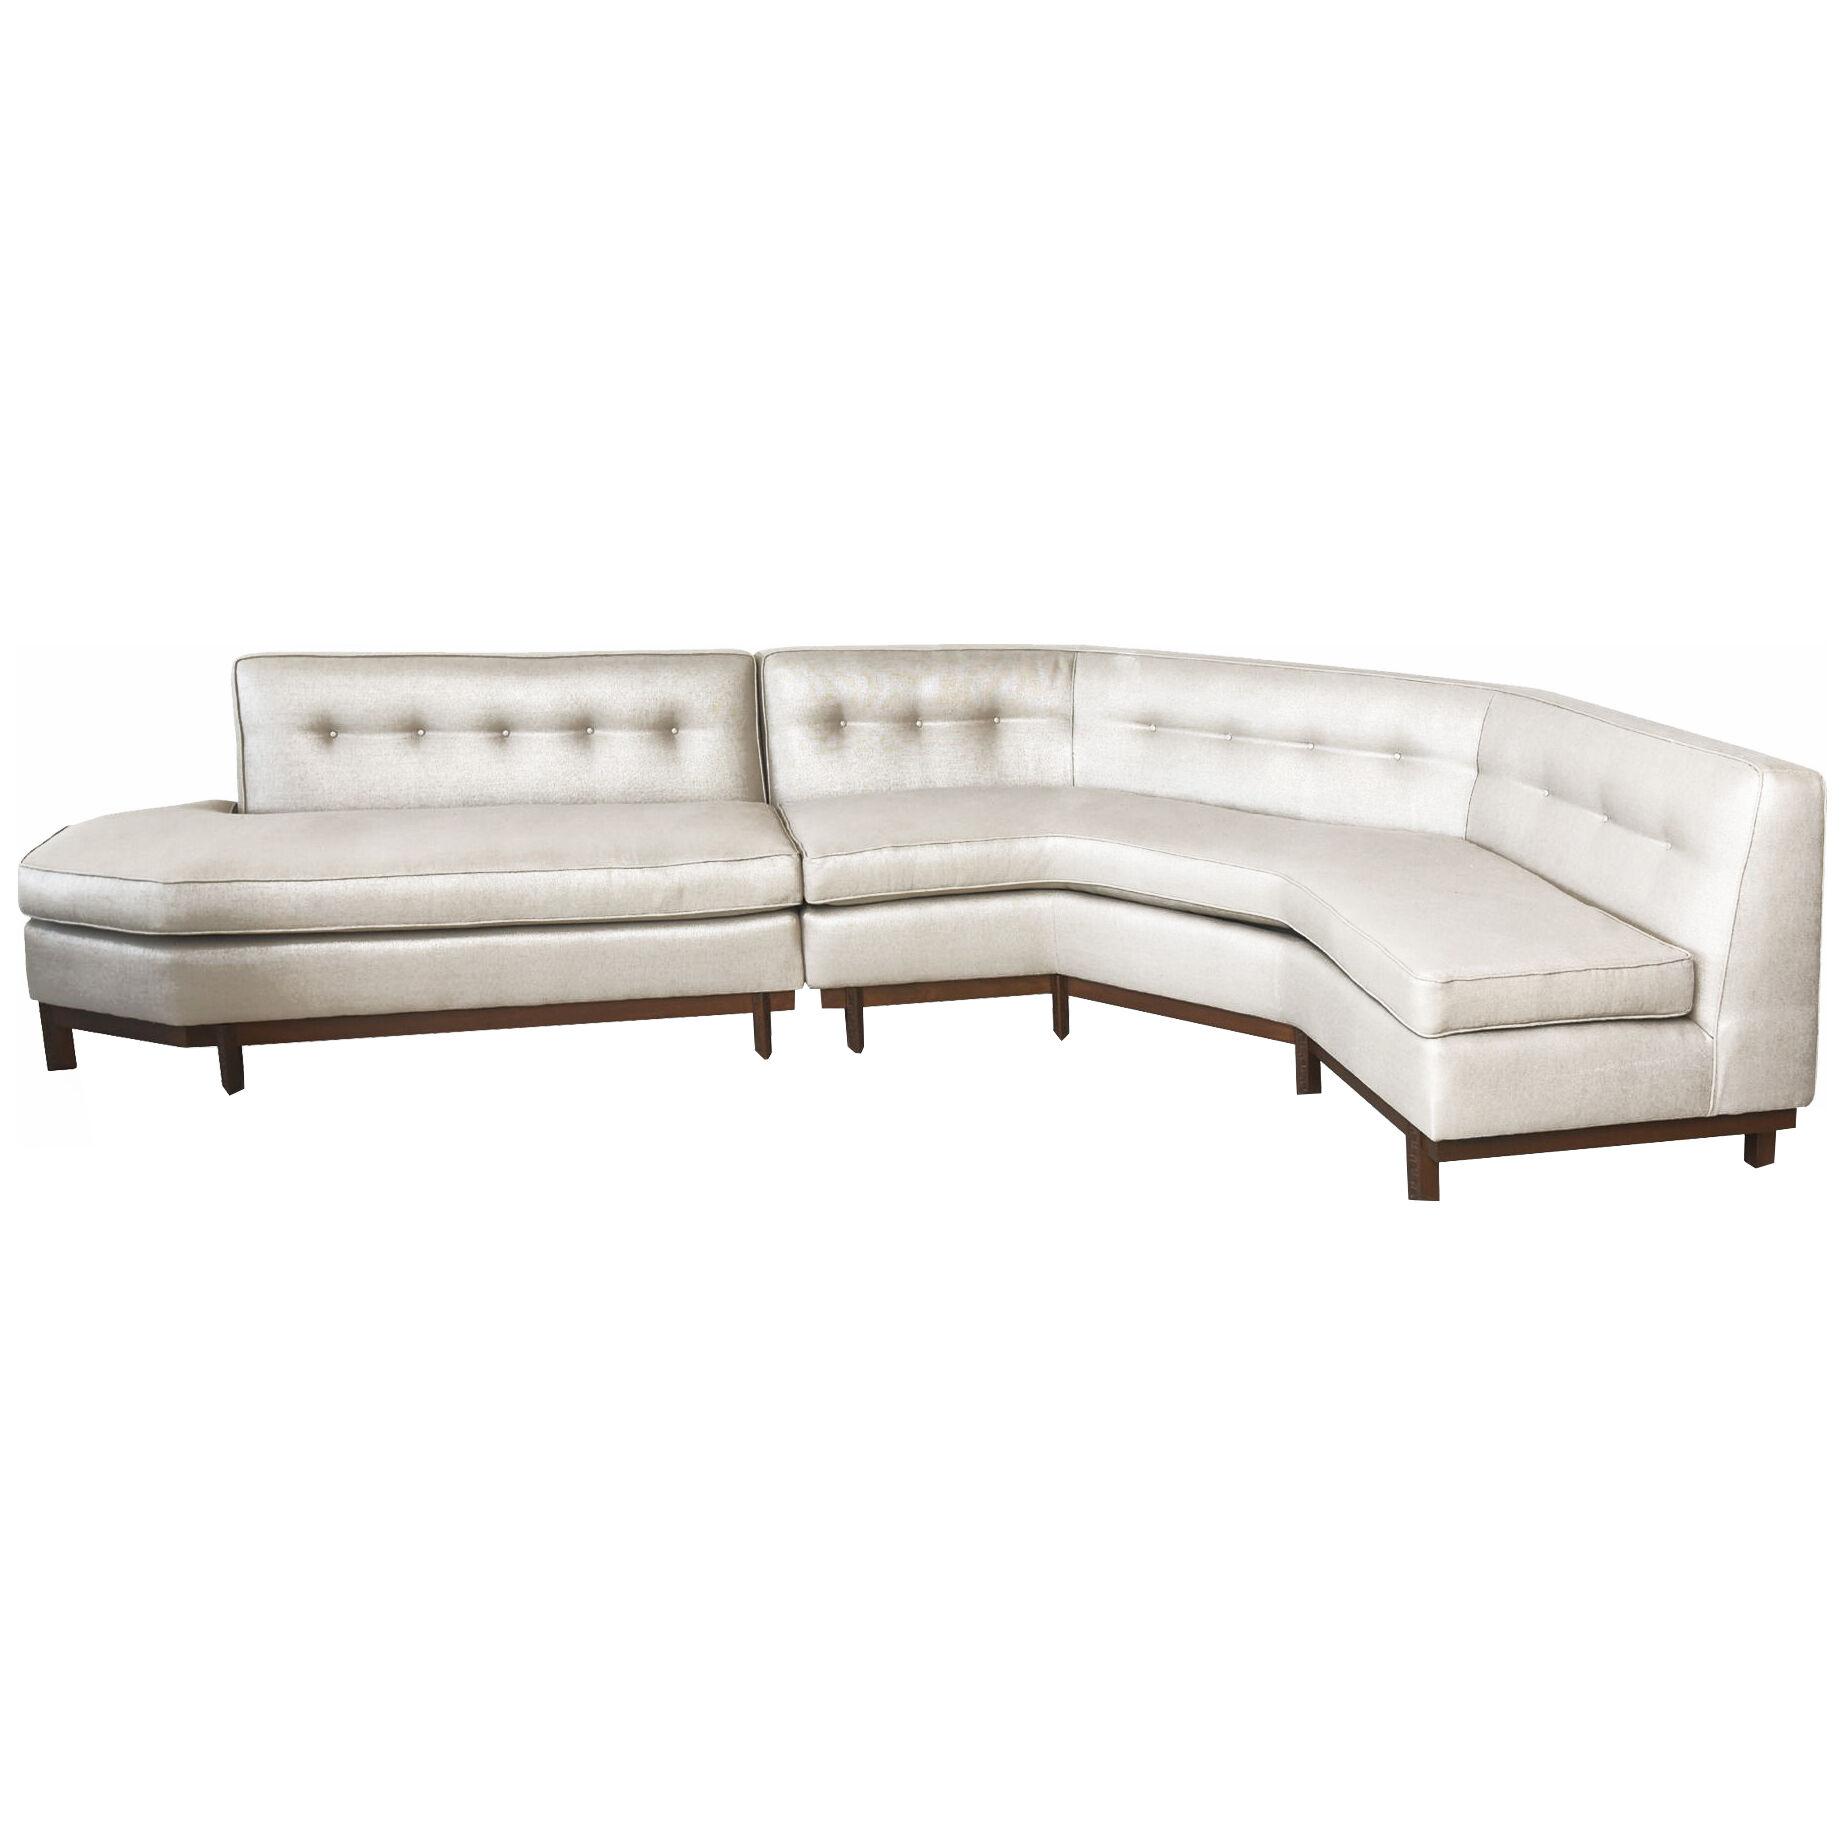 American Modern Upholstered Sectional Sofa